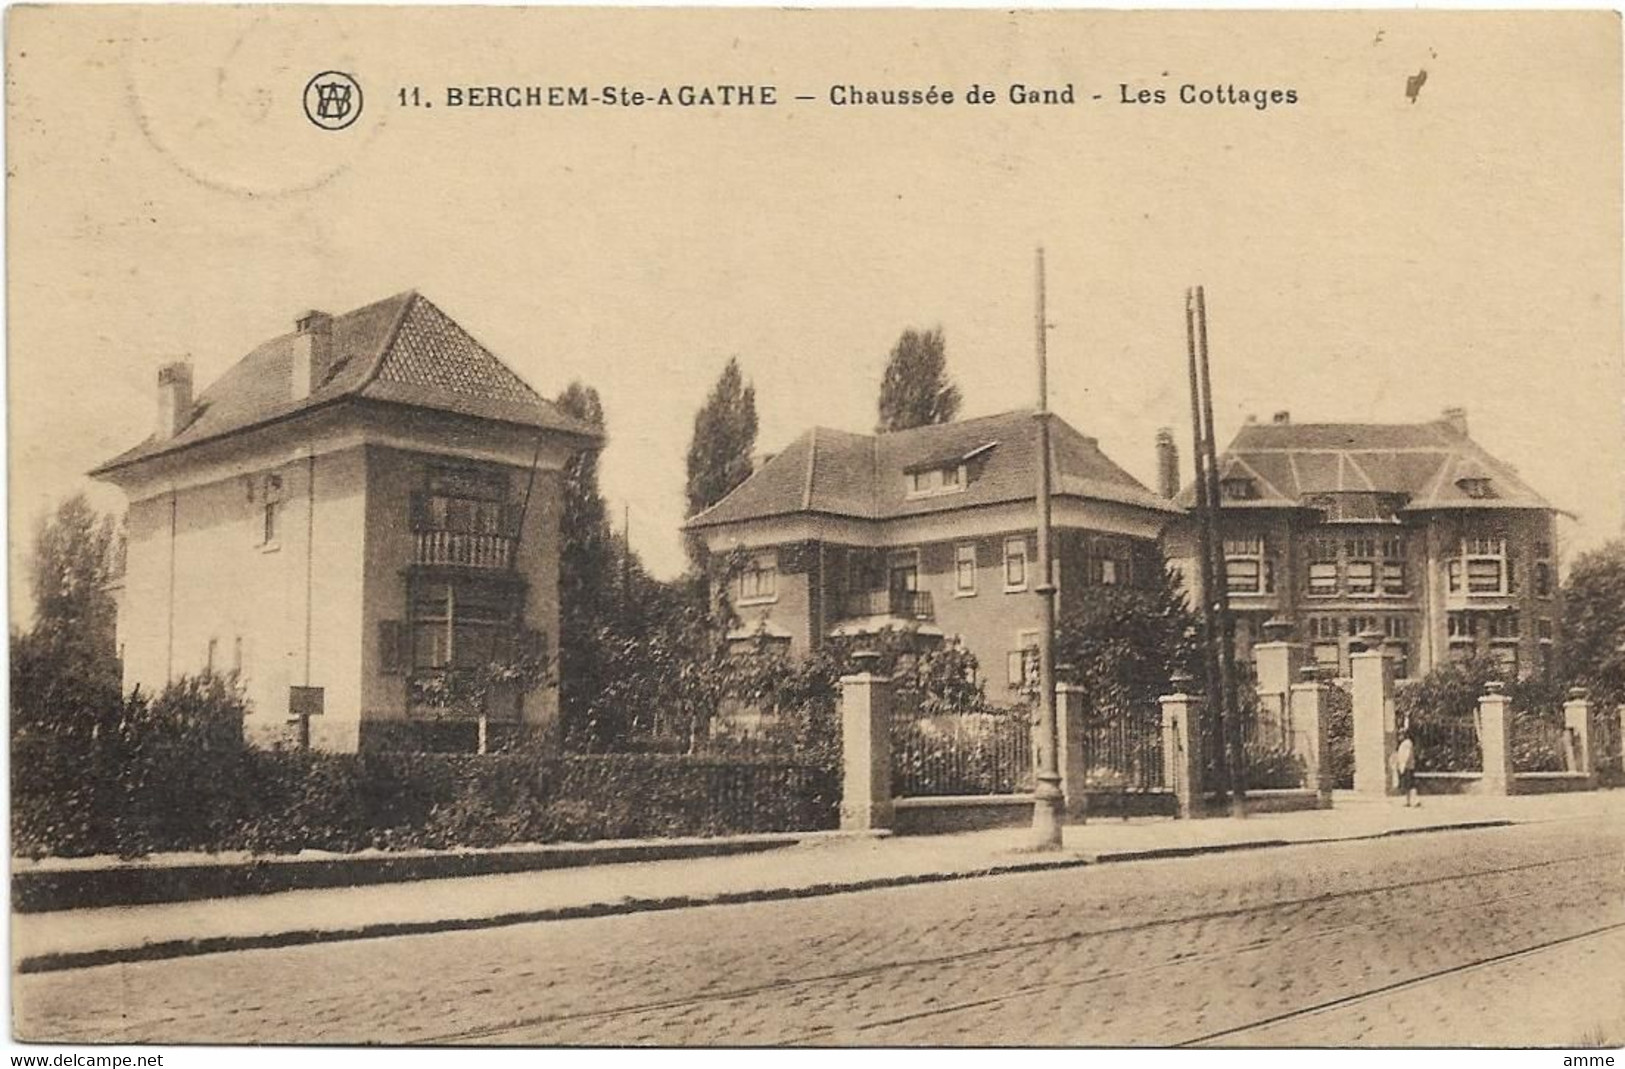 Sint-Agatha-Berchem   *   Chaussée De Gand - Les Cottages  (WB,11) - Berchem-Ste-Agathe - St-Agatha-Berchem